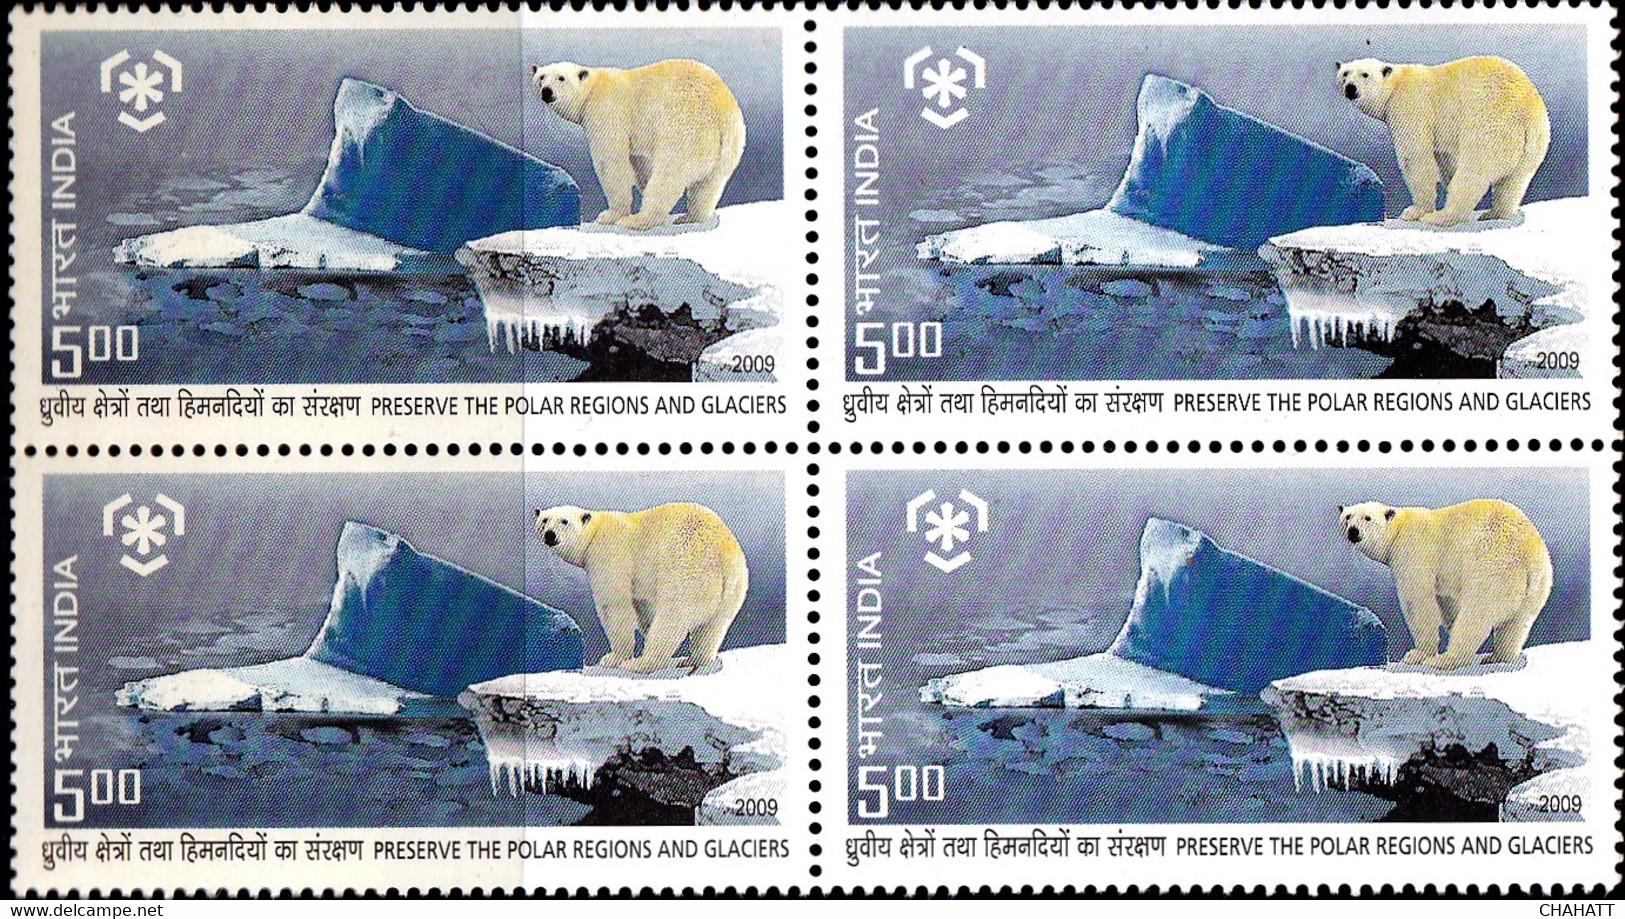 POLAR BEARS - PRESERVE THE POLAR REGIONS AND GLACIER- BLOCK OF 4 WITH CORNER PAIR-VARIETY-INDIA 2009-MNH-D5-41 - Preserve The Polar Regions And Glaciers